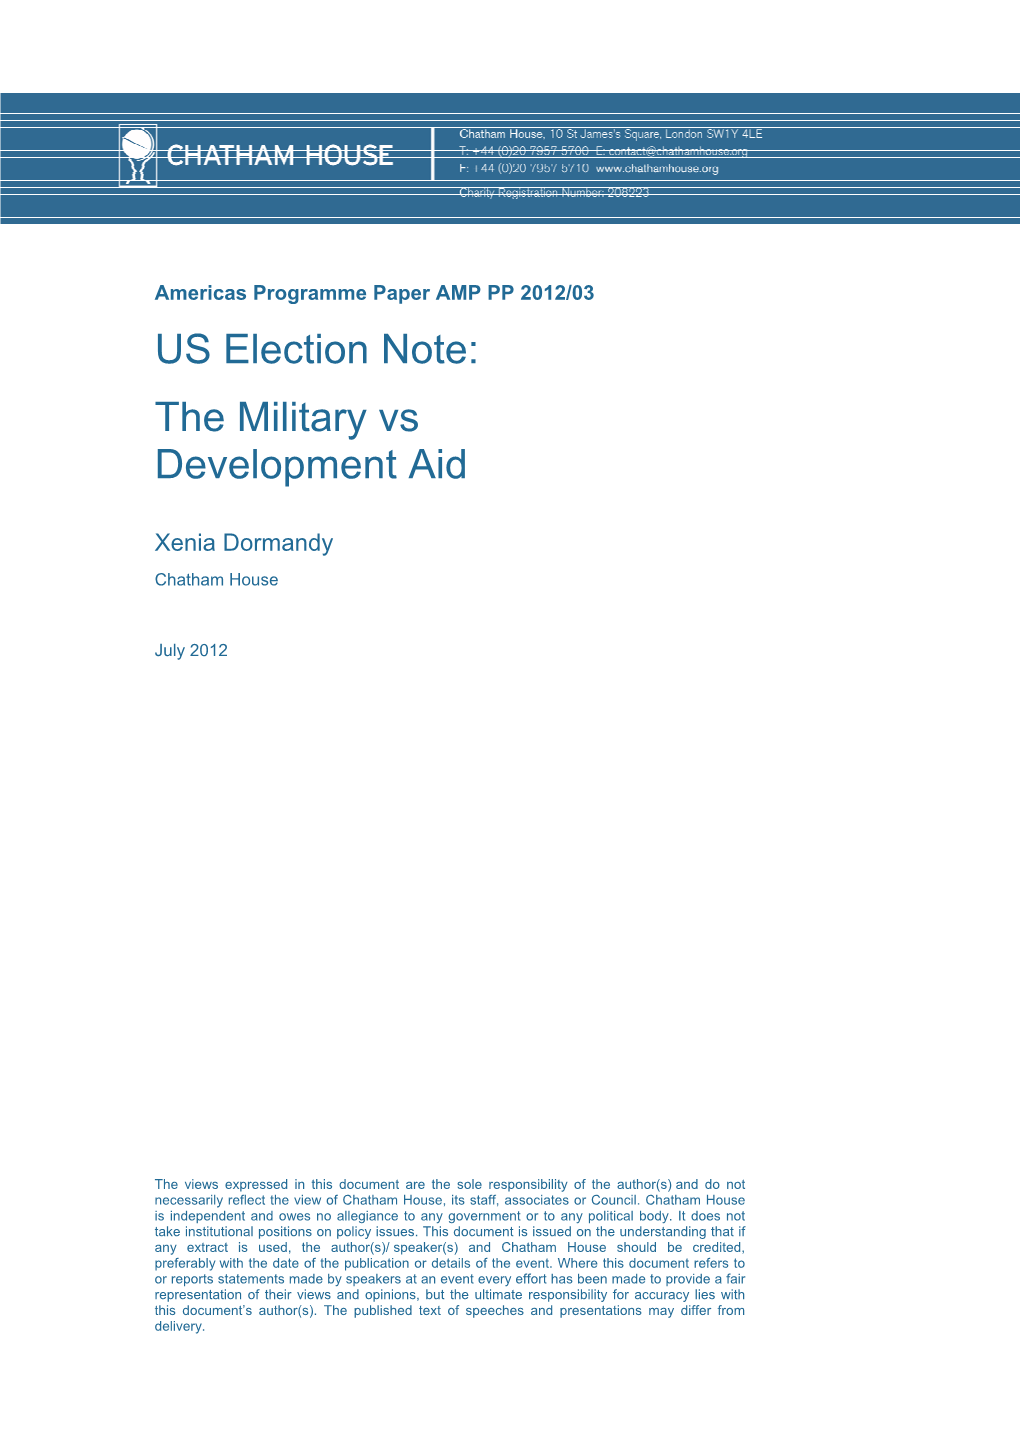 The Military Vs Development Aid